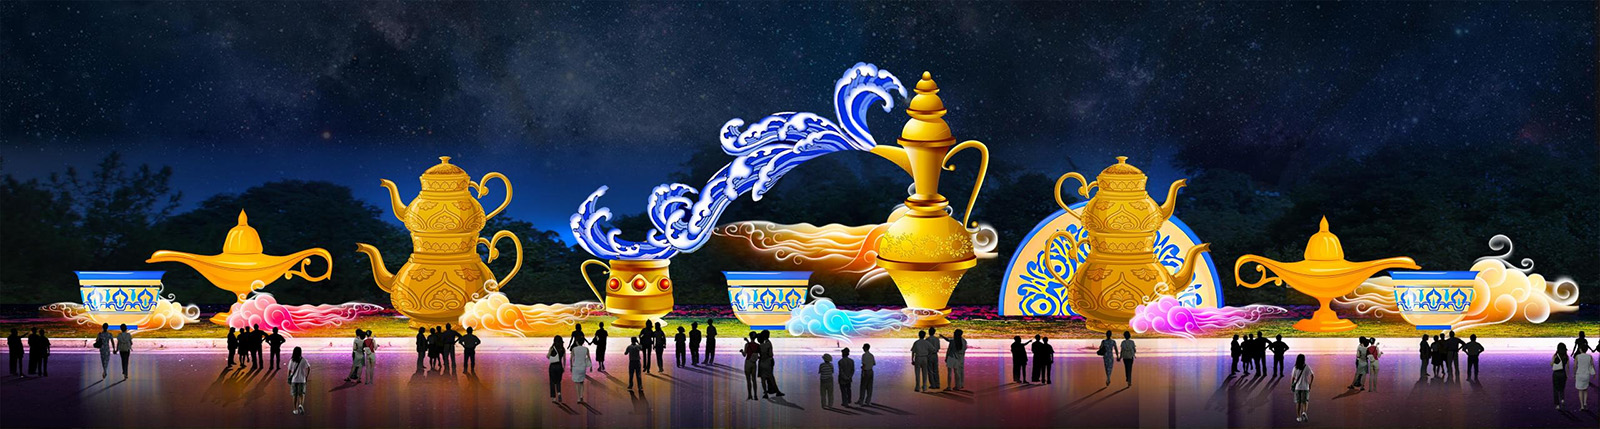 Desert oasis - Riyadh Ji China Tianfu Lantern Temple Fair (24)